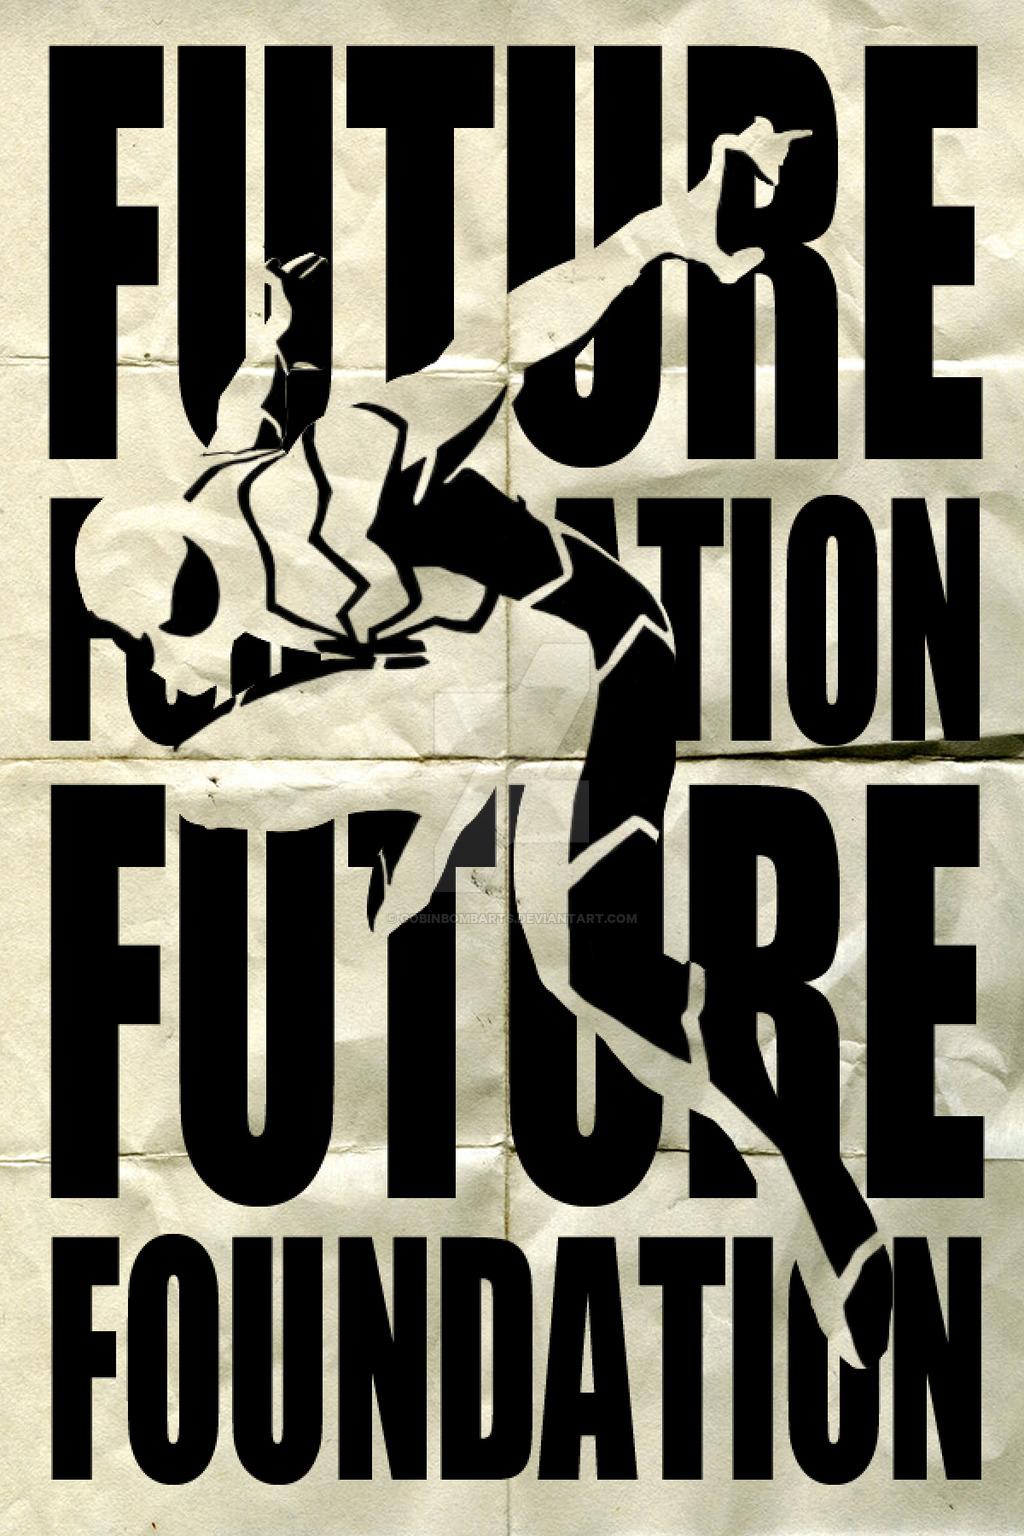 Spiderman Future Foundation Minimalist Poster